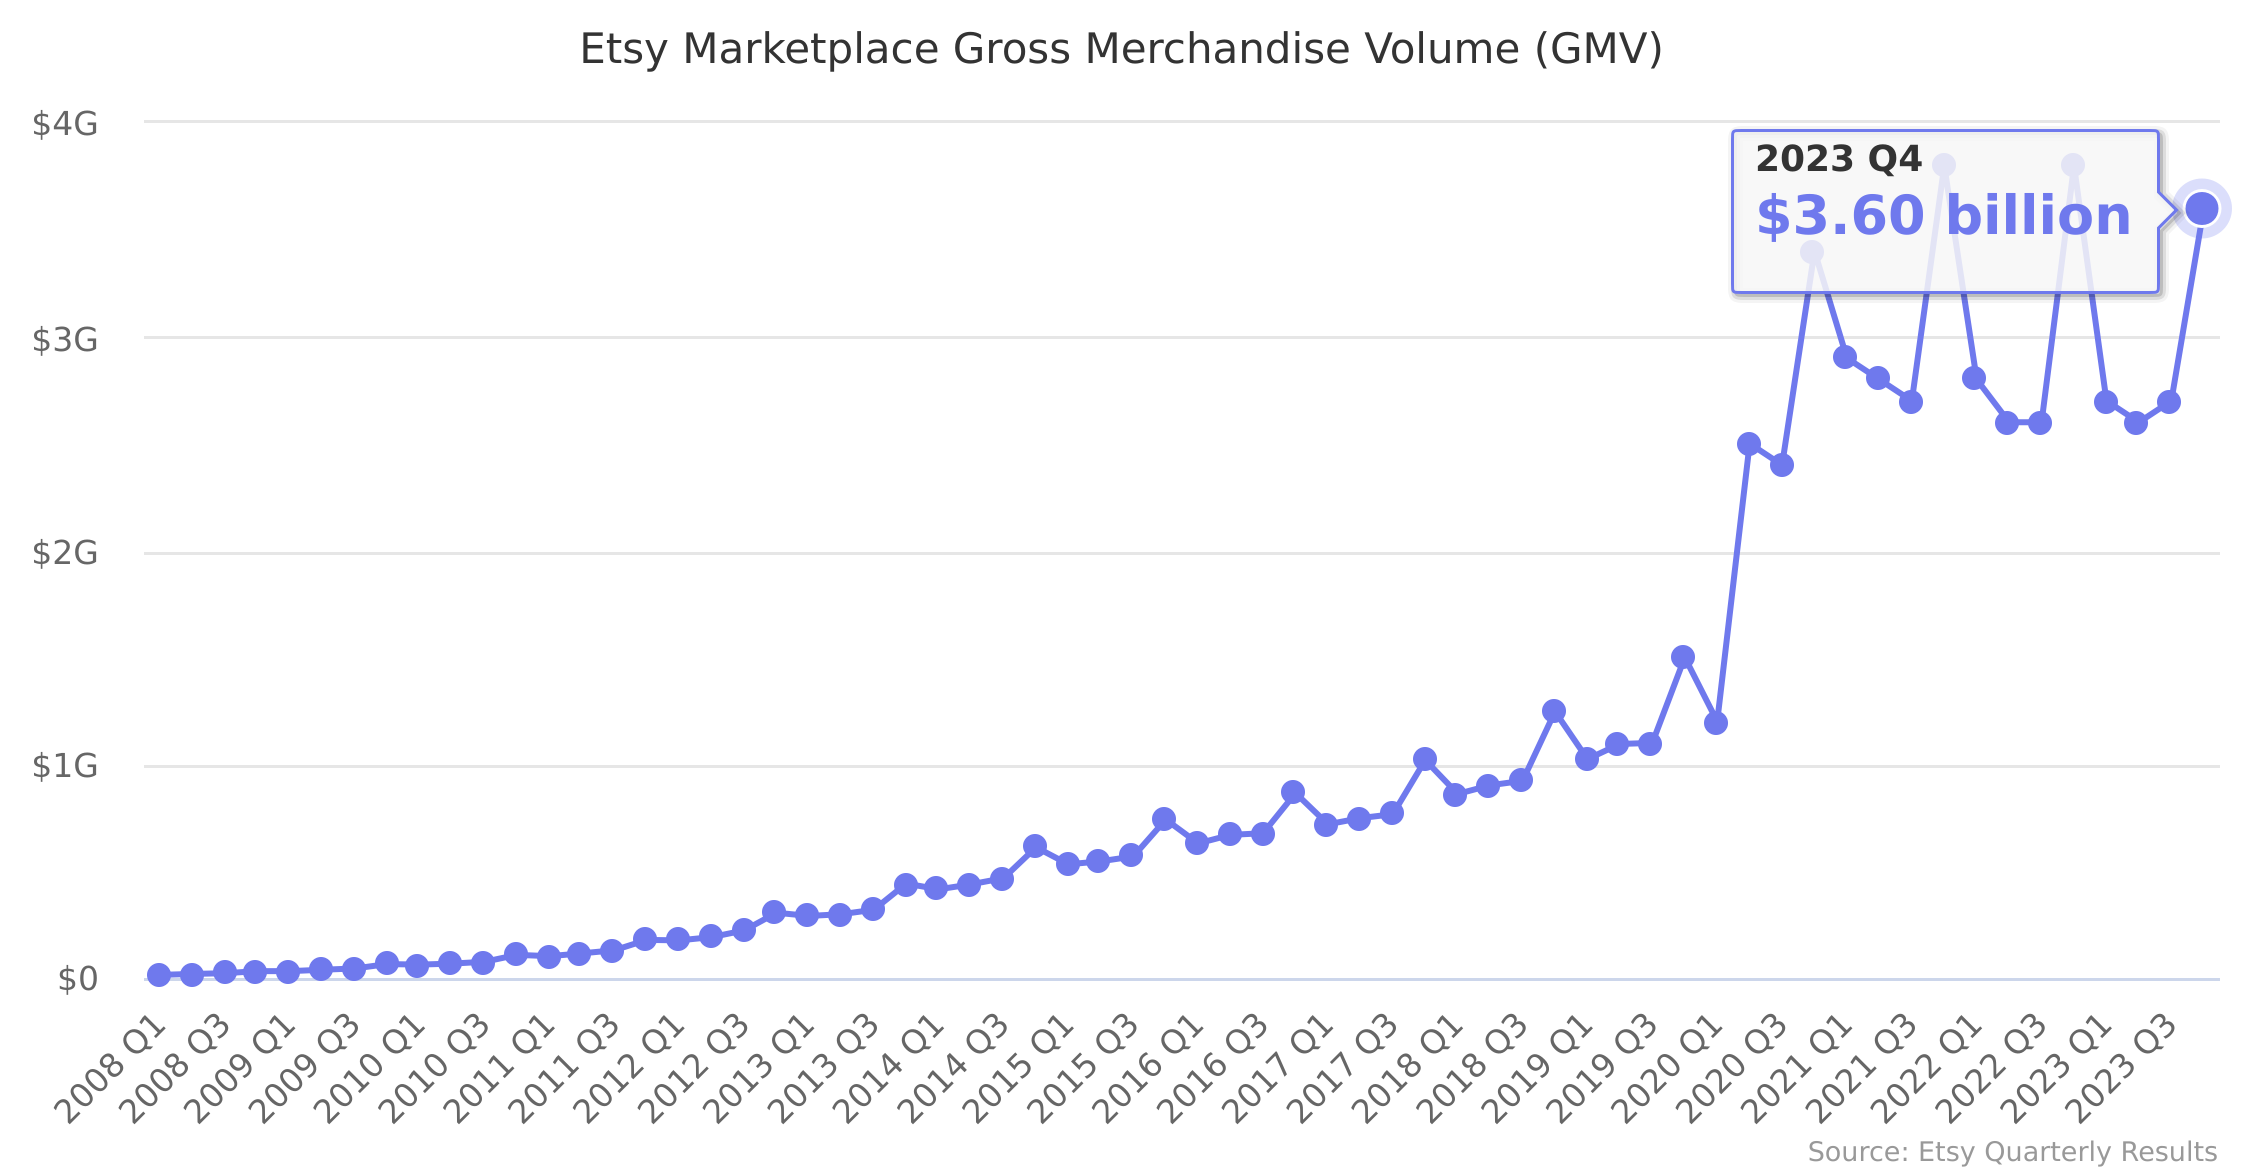 Etsy Marketplace Gross Merchandise Volume (GMV) 2008-2022